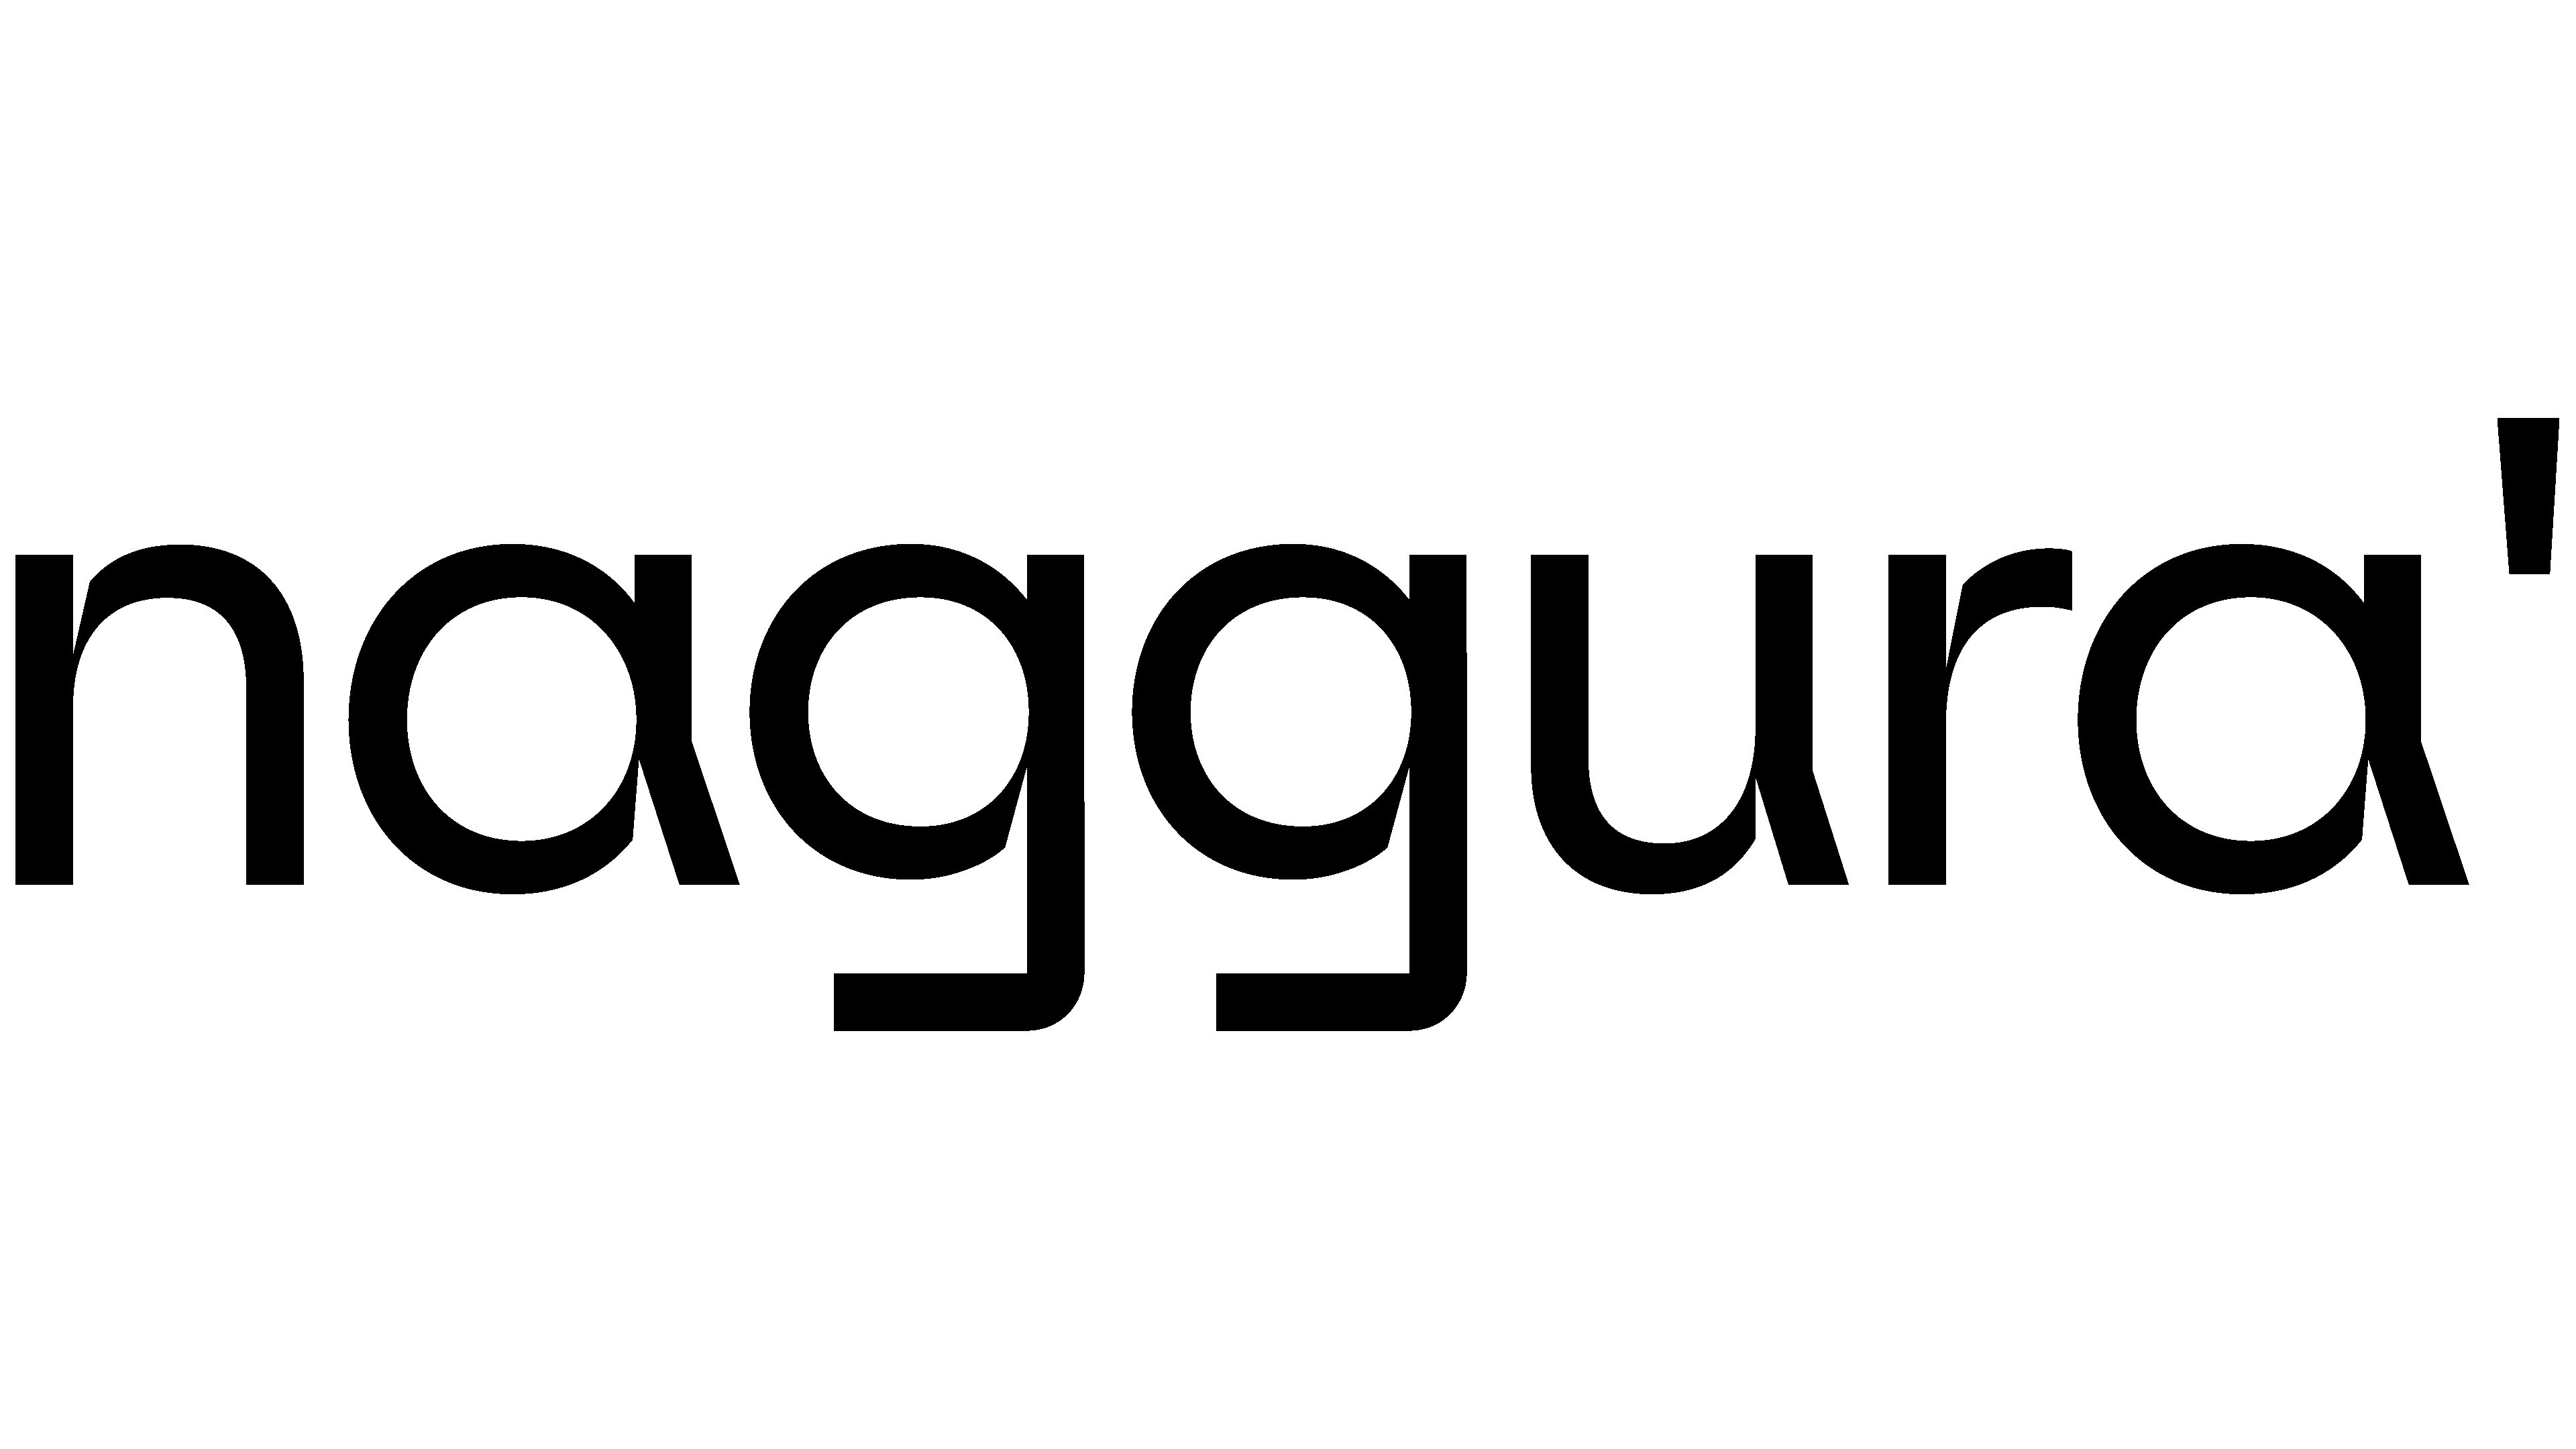 Naggura rebranding by Toormix design agency